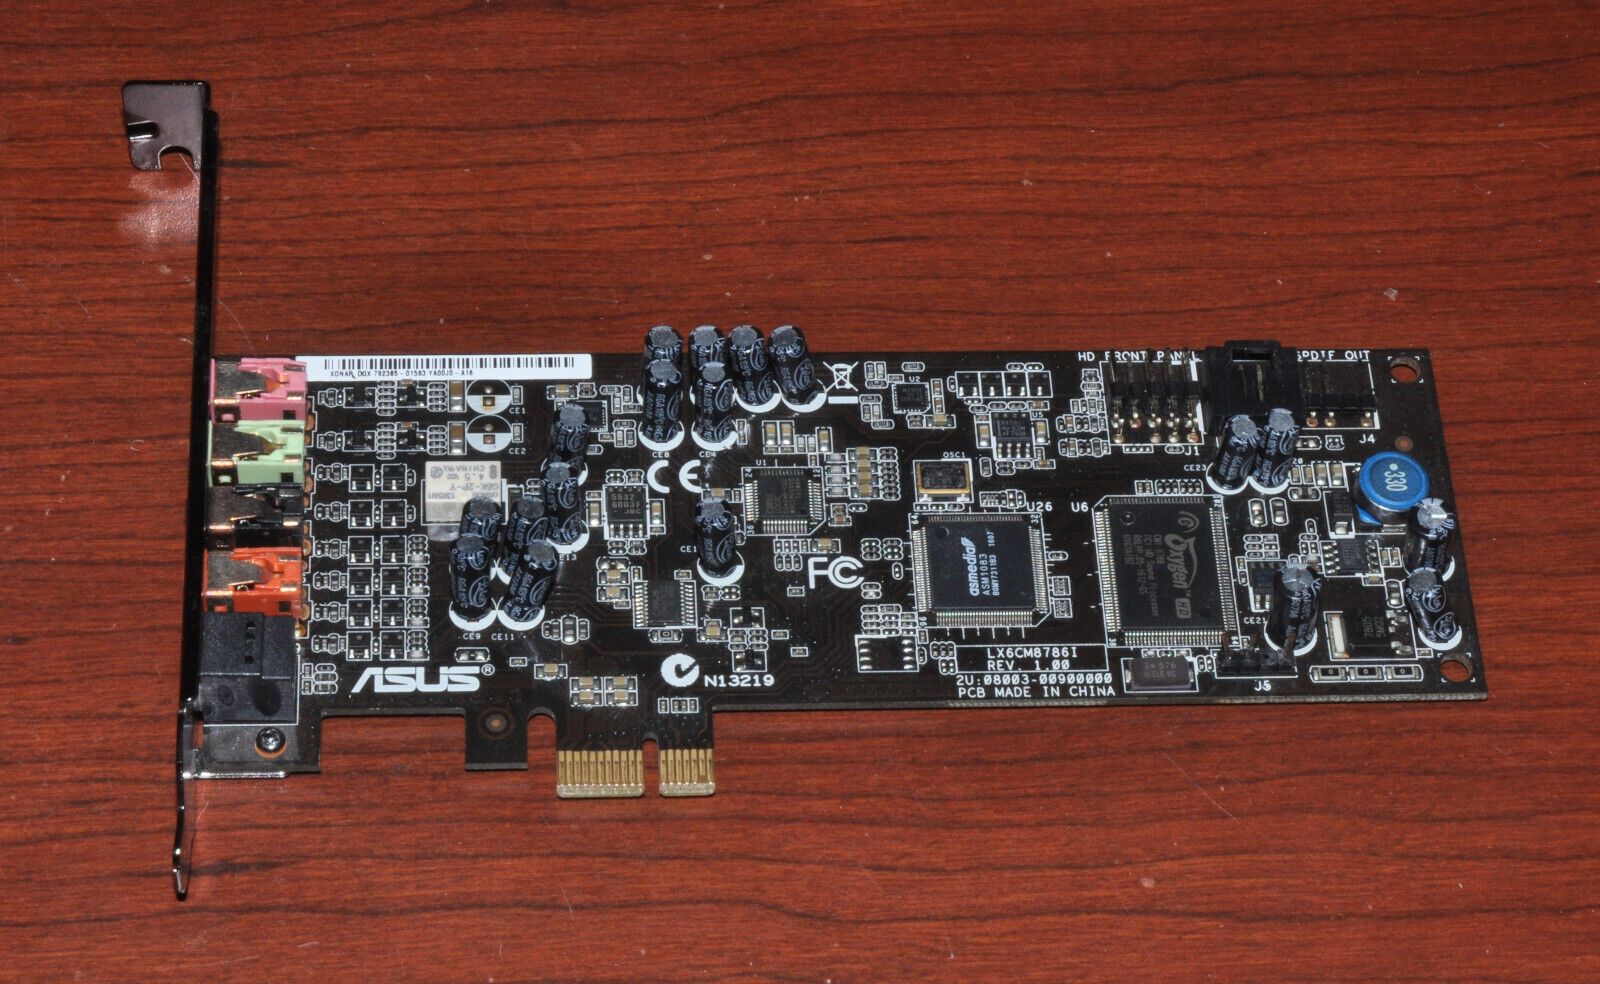 ASUS XONAR DGX (ASM) PCI-E x1 5.1 Sound Card